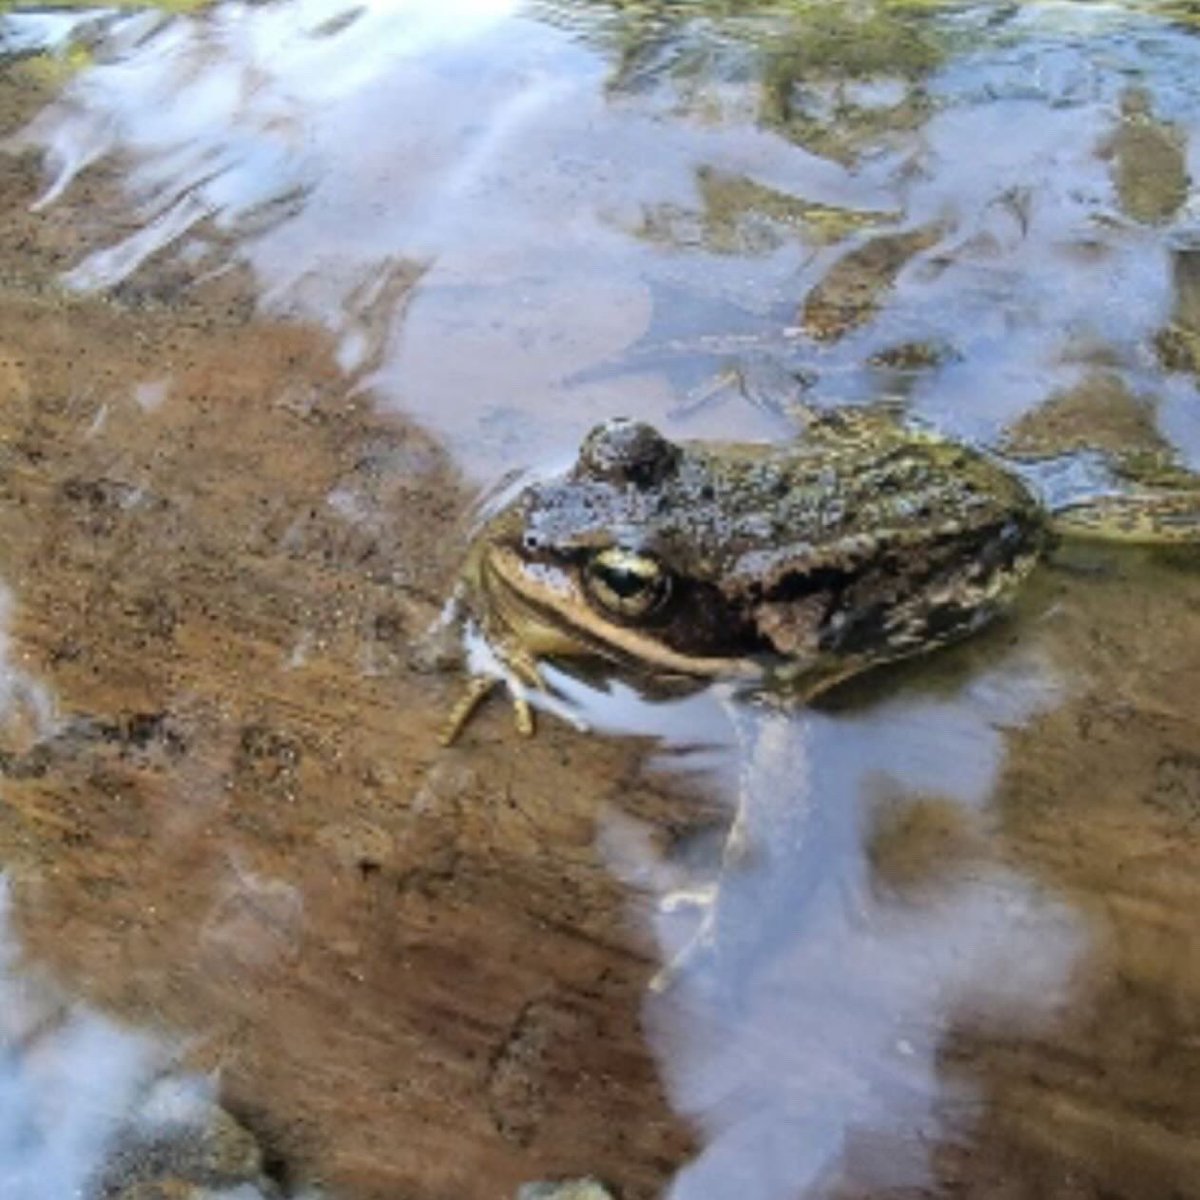 Meet the high-elevation member of the Oregon pond frog delegation - the Cascades frog! #AmphibianWeek! Learn more at our Instagram - shorturl.at/dDLPU